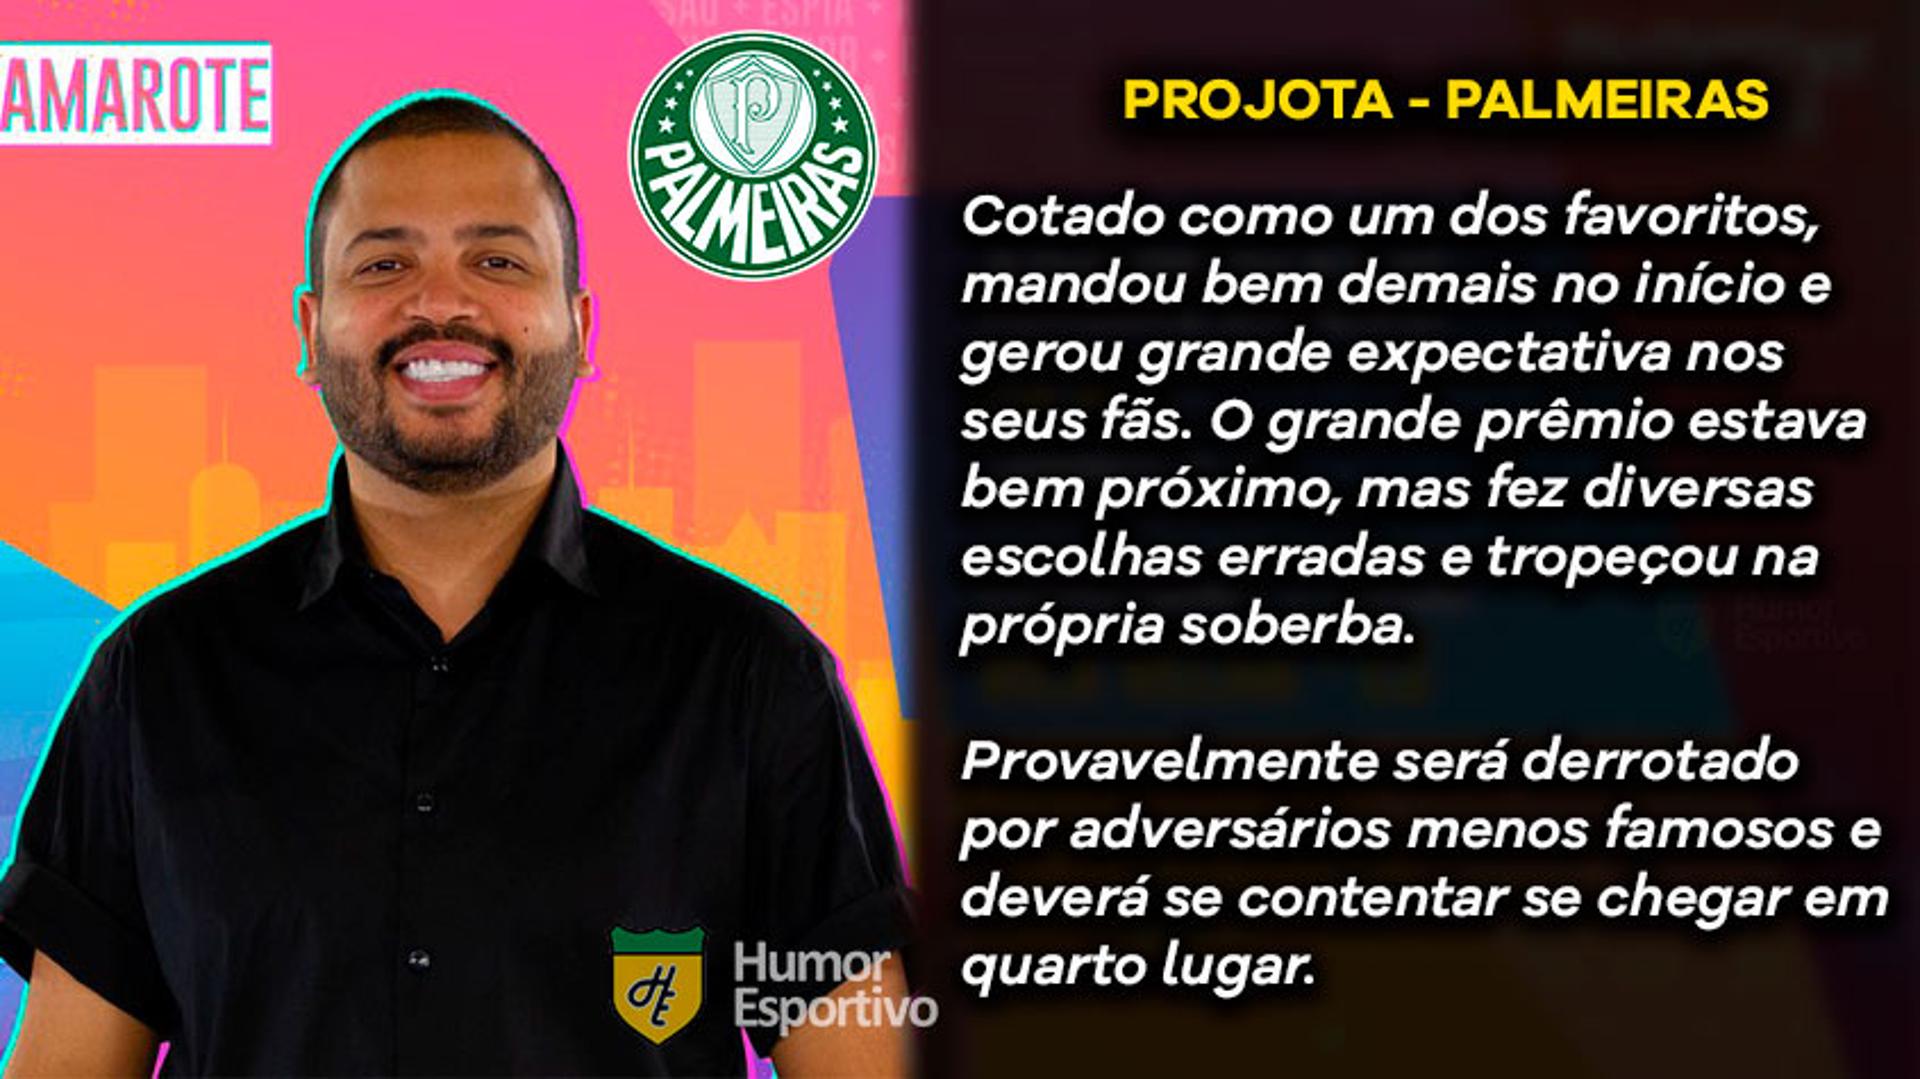 Projota - Palmeiras - BBB